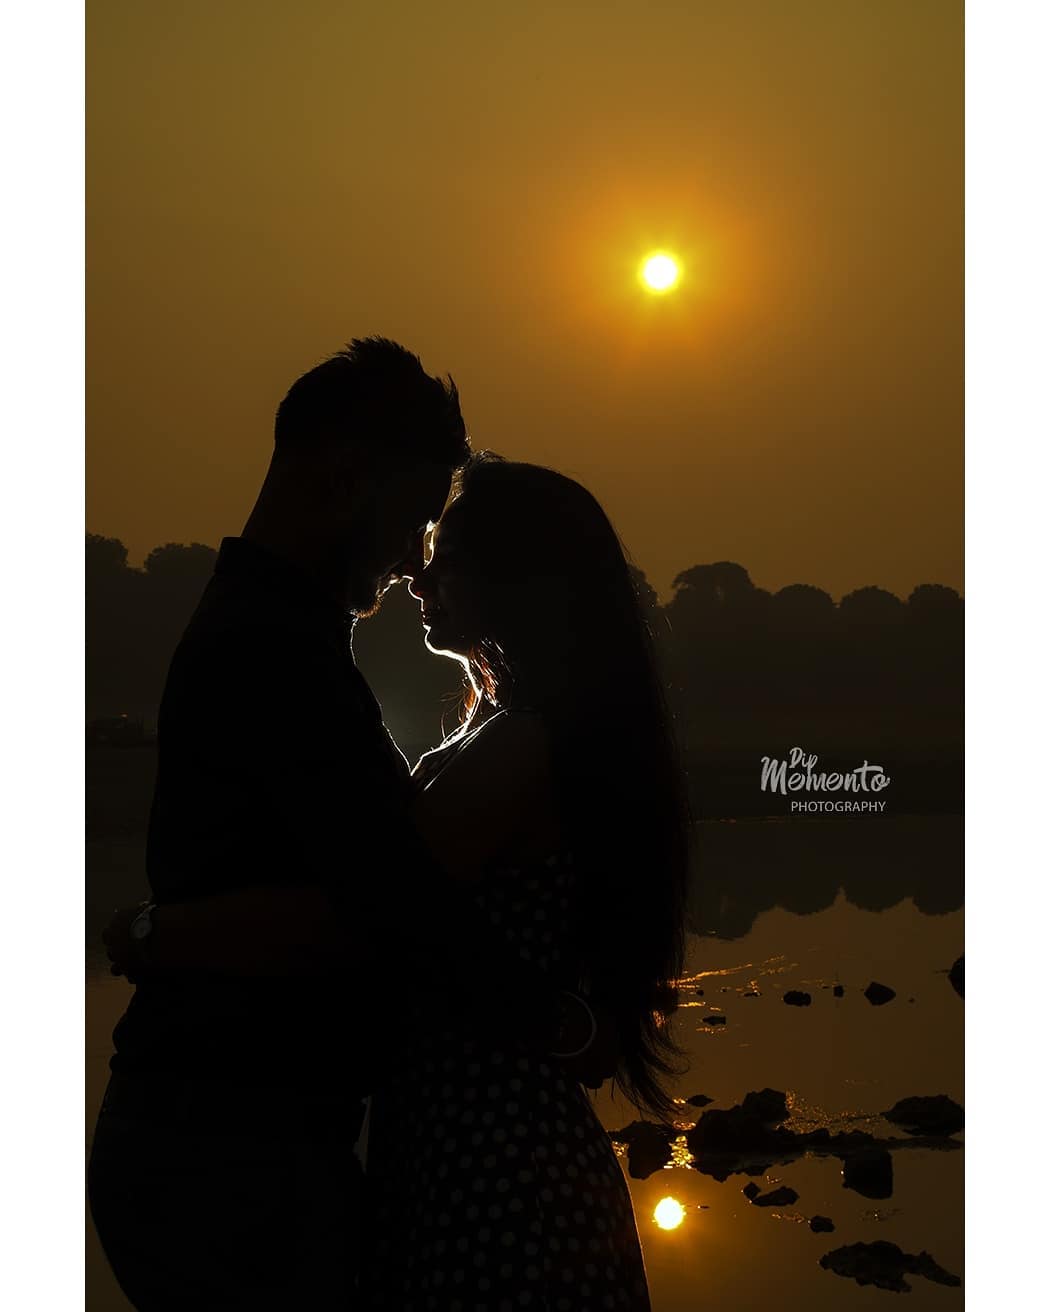 You light up my life..💏💕

Prewedding
 @anj_tr_2611 ❤️ @mihirr2

Captured by: @dip_memento_photography
@pandyapremal809

#couplegoals❤️ #couplegoals💑 #weddingbuzz #weddingz #weddingbrigade #preweddingstory 💍 #preweddingfilm #photographylovers #Coupleshoot #indianengagement #candidphotogaphy #candidphotos #9924227745 #indianweddinginspiration #wedding #weddingzin #weddingbrigade
#candidphotographer
#weddingfables
#weddingz
#indian_wedding_inspiration
#dipmementophotography
#indianweddinginspiration
#weddingz @couple_pic_79
@weddingnet @weddingsutra @wedding.surat @wedding_gujarat @wedding_clicks_ @wedding.india @wedd.days @weddingwireindia @weddingbling_ @corrupt.image @weddingwearguides @weddingz.in @indian__wedding @indianweddingz @indian_weddings @weddinggoalsfun @couple_pic_007 @indianweddingbuzz @the_indian_wedding_planner @indianweddingsphotography @candidweddingstories @only_couple_pic